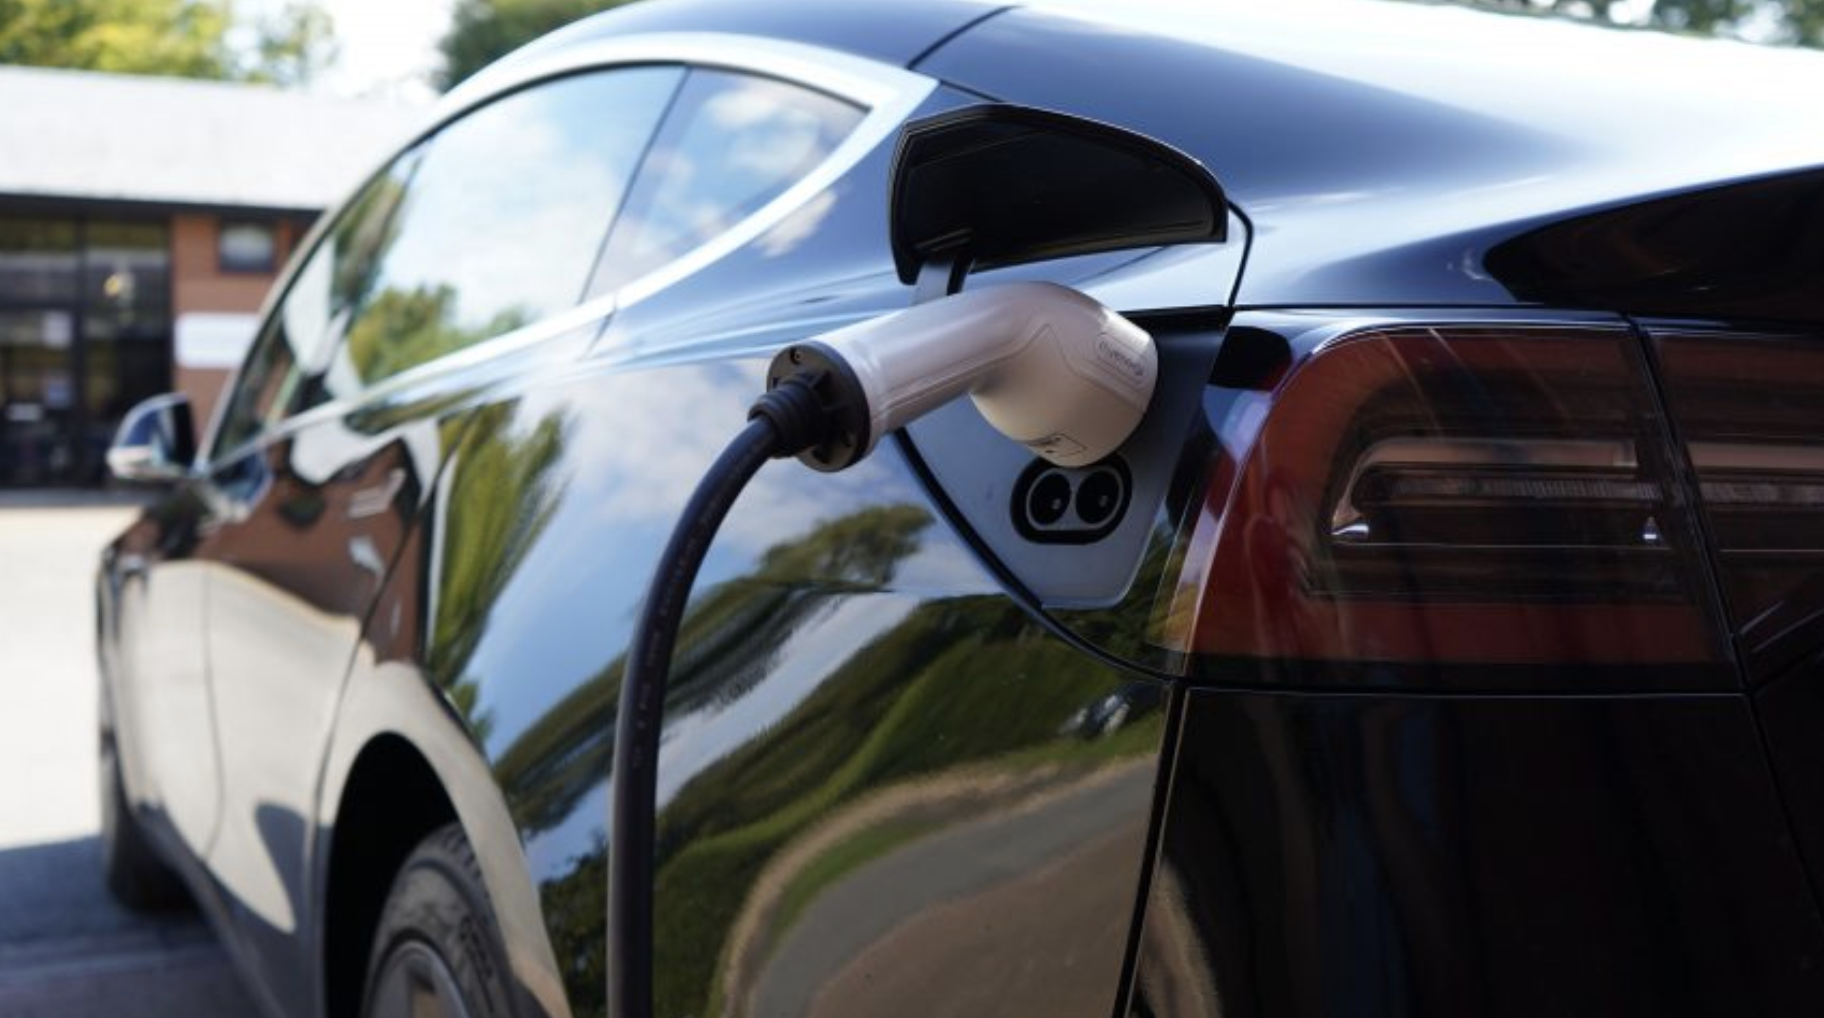 zappi charging a Tesla electric car